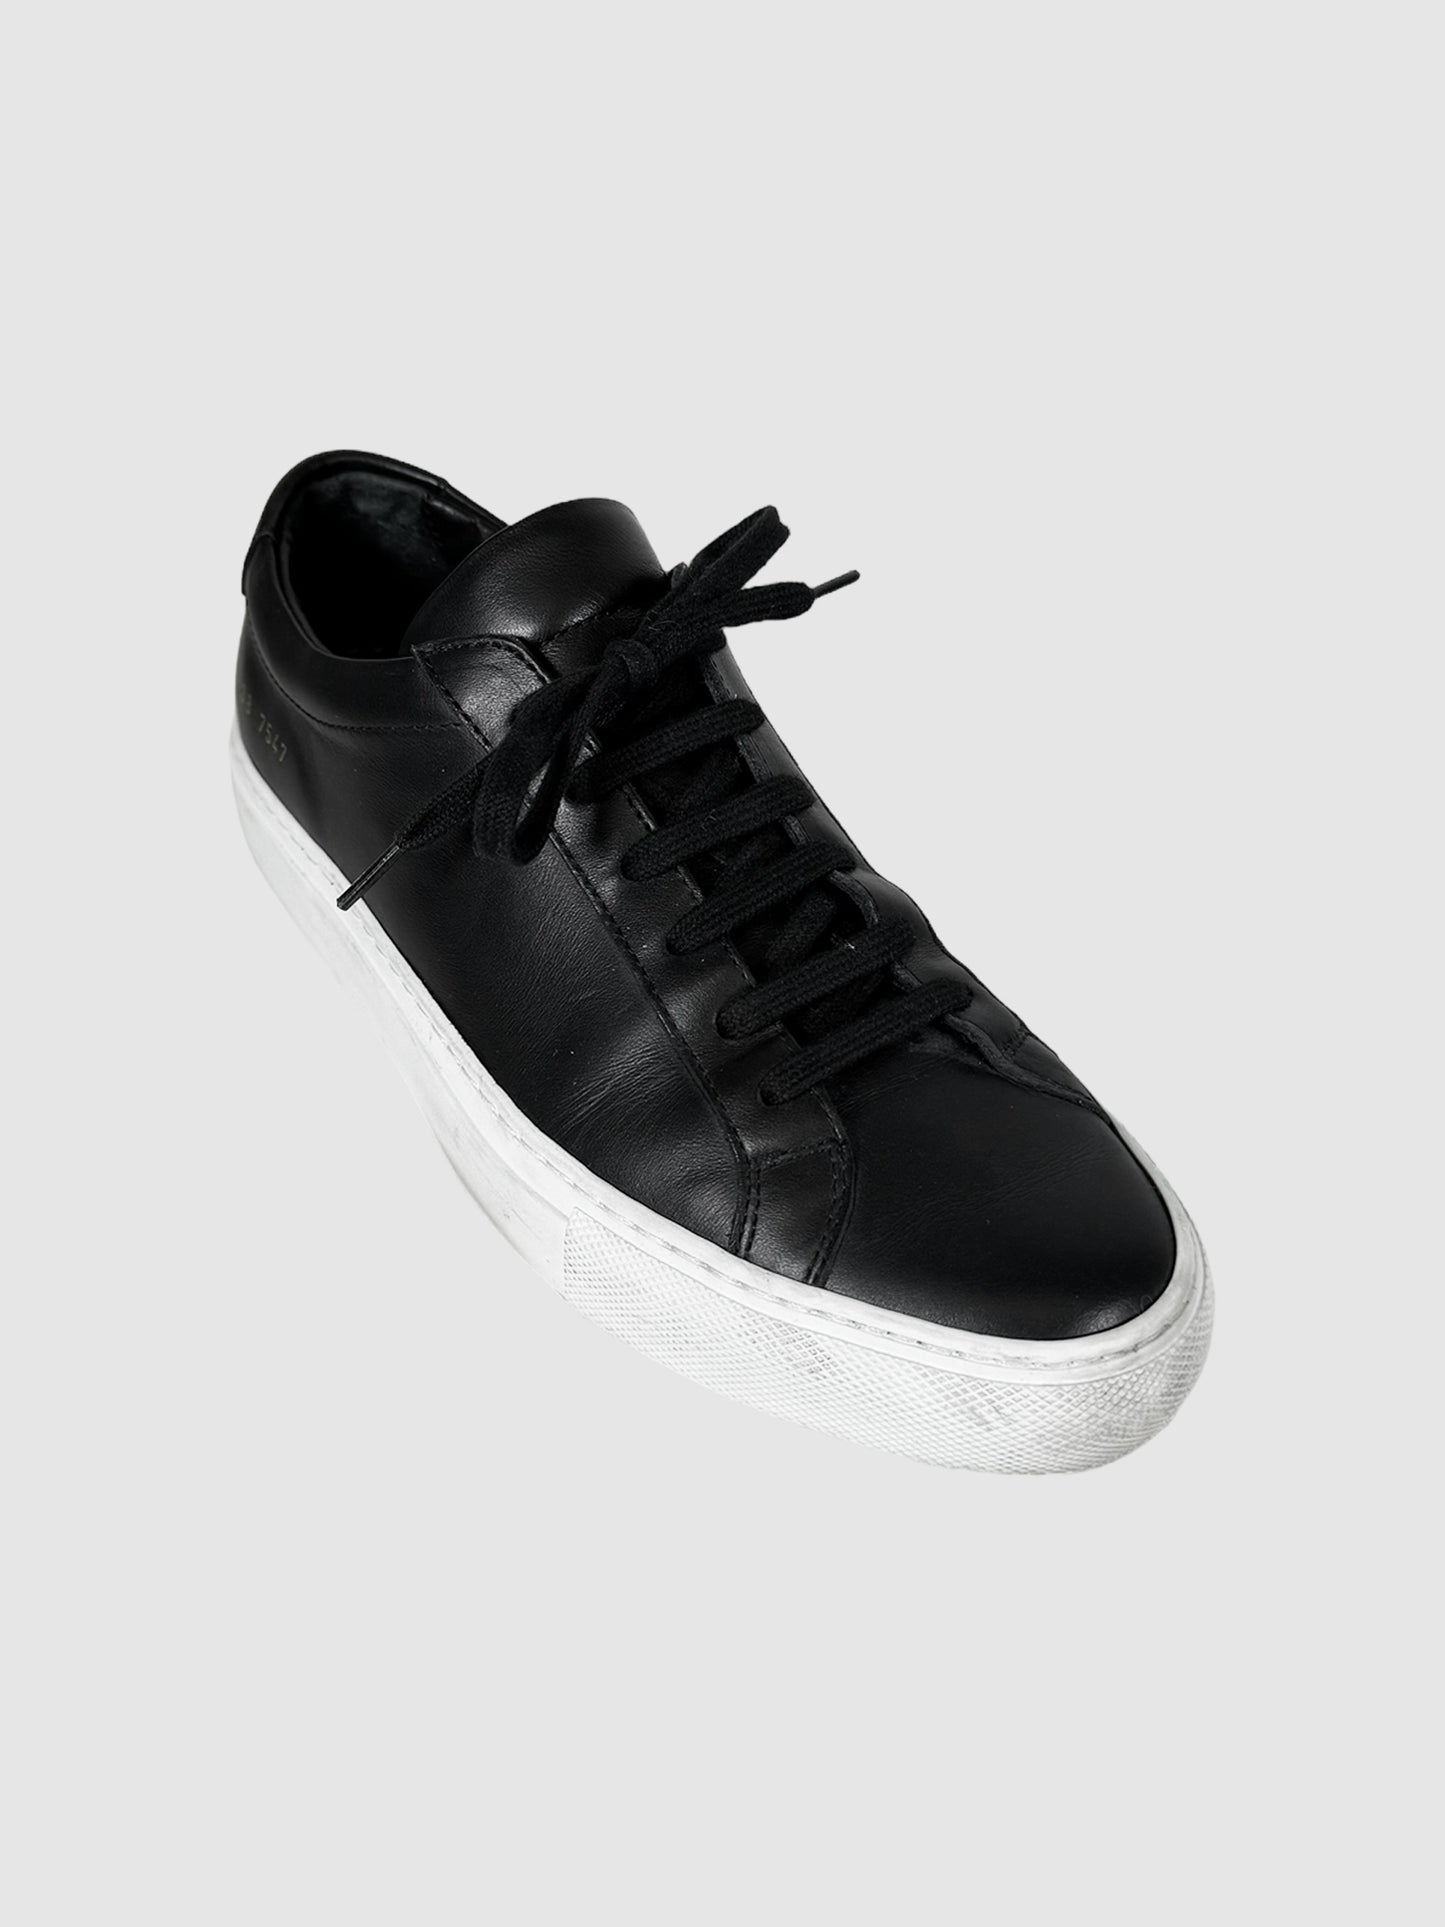 Original Achilles Sneakers - Size 38